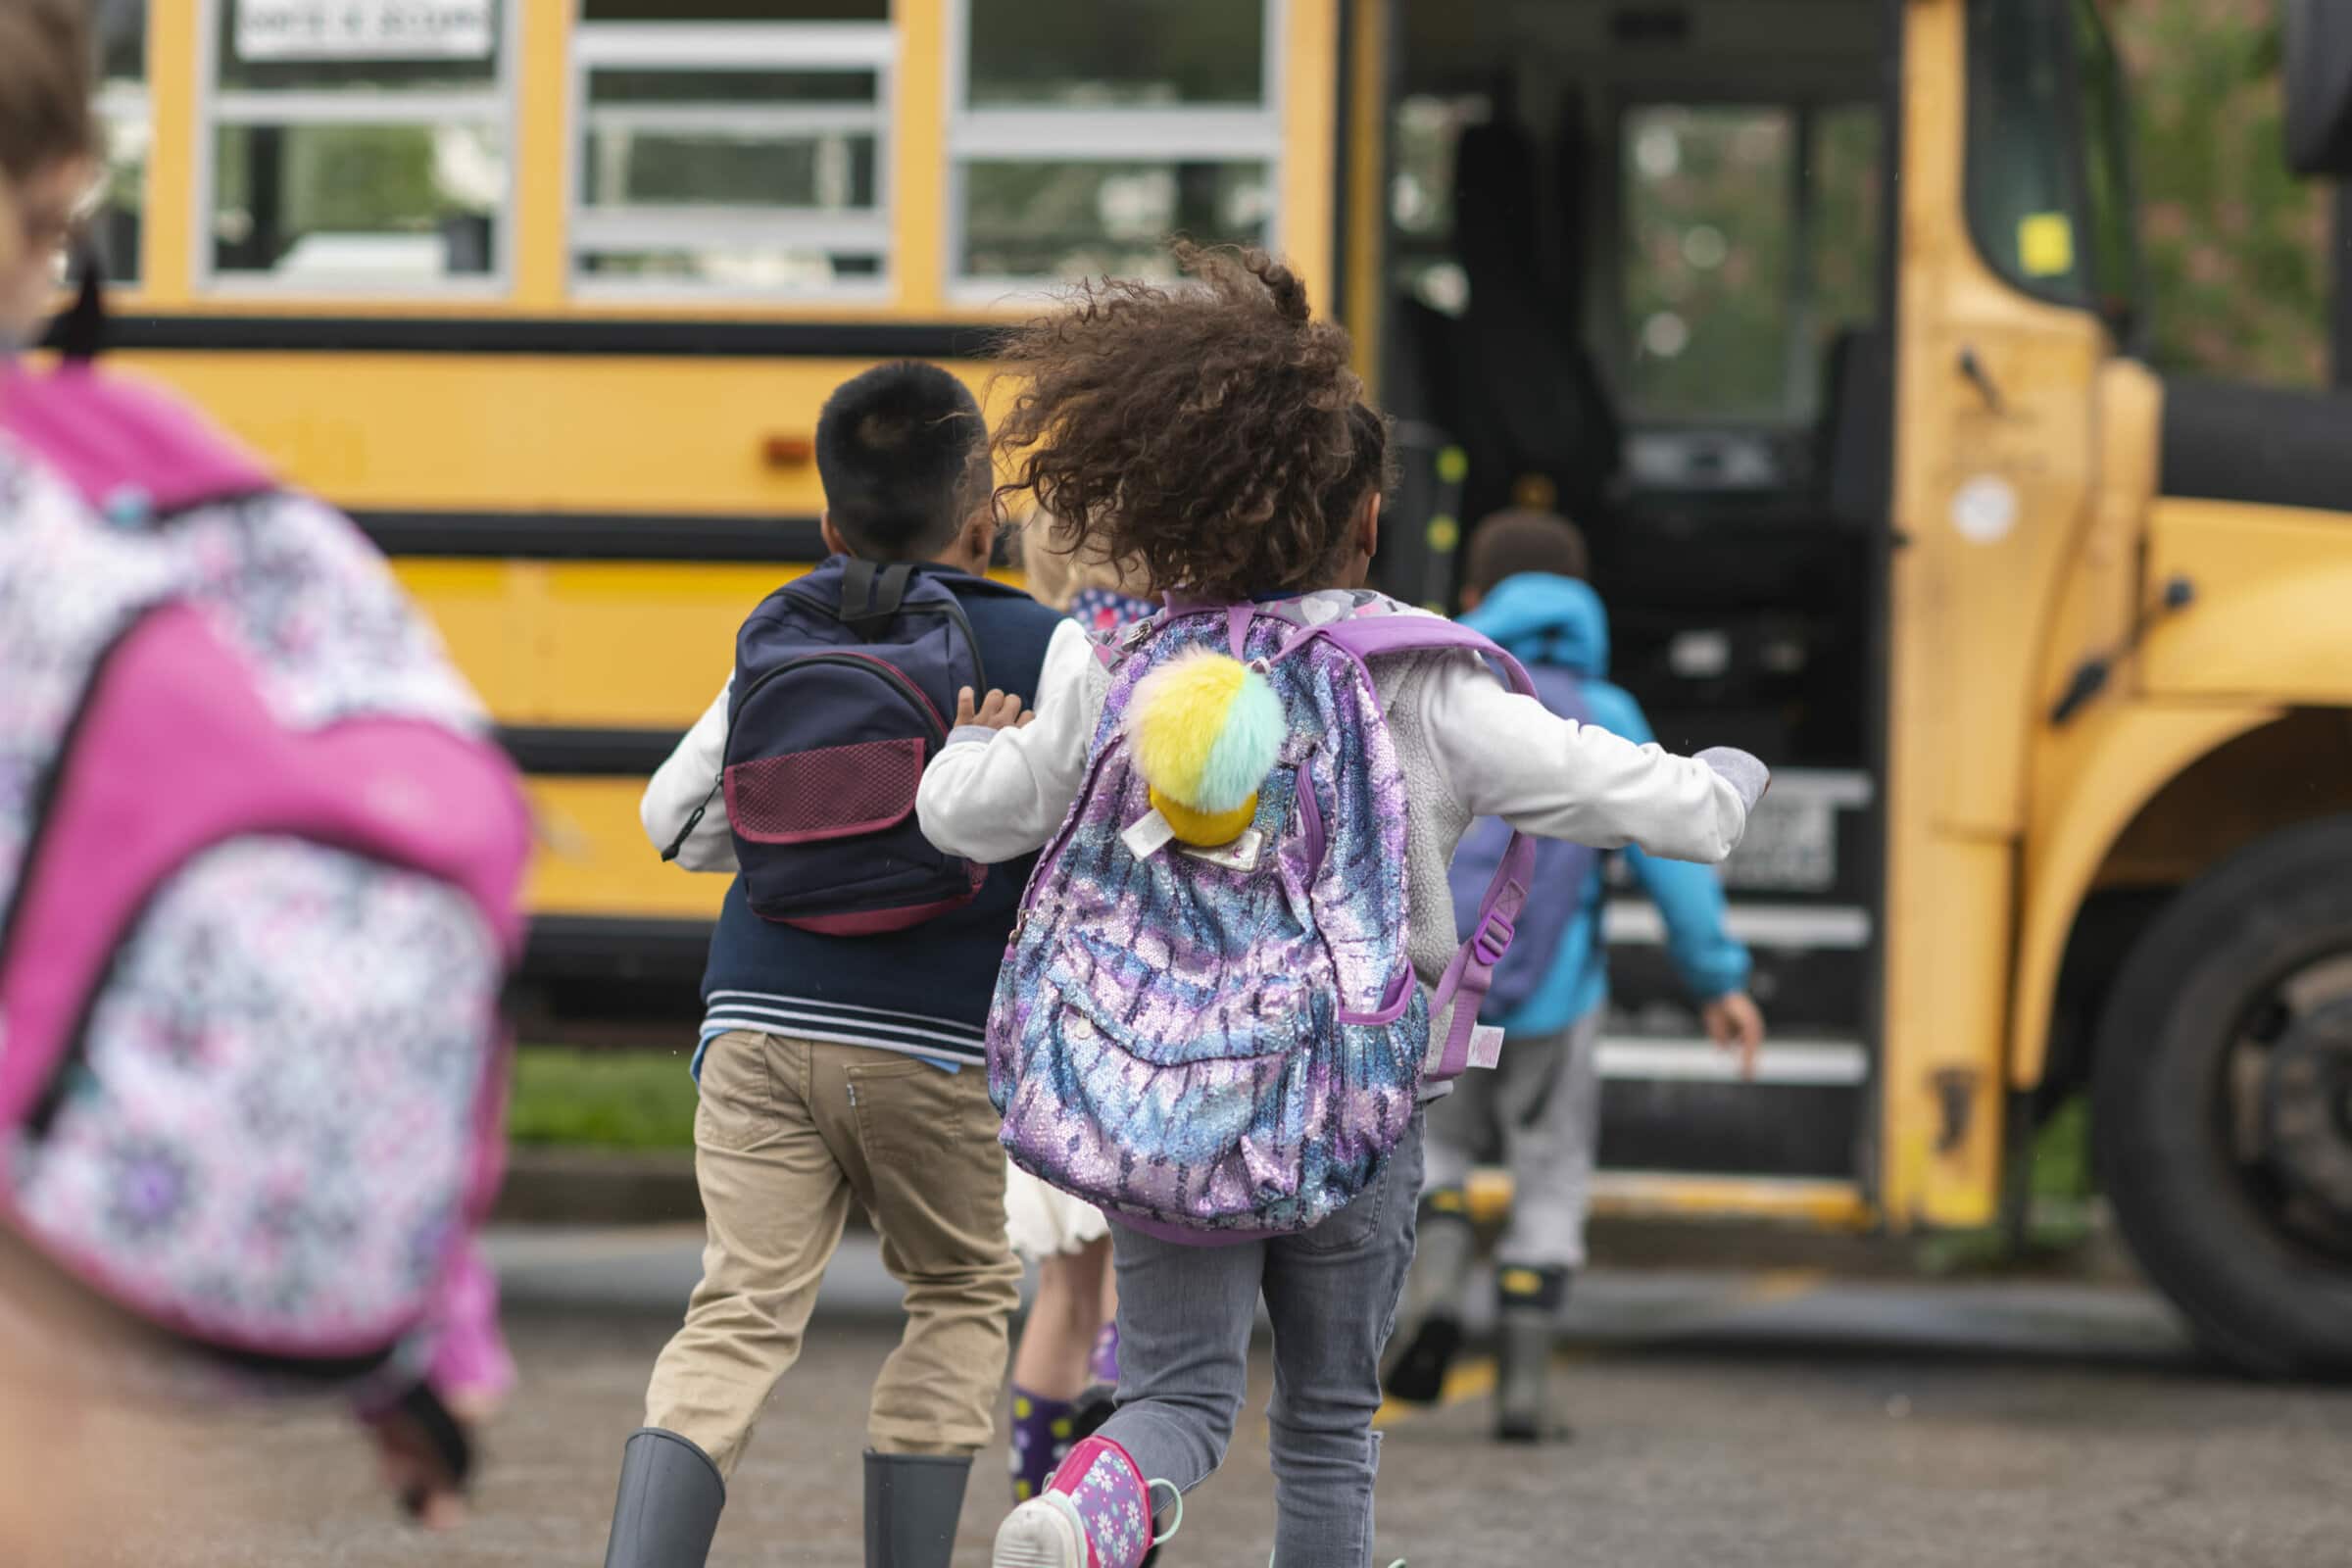 A group of children running towards a school bus